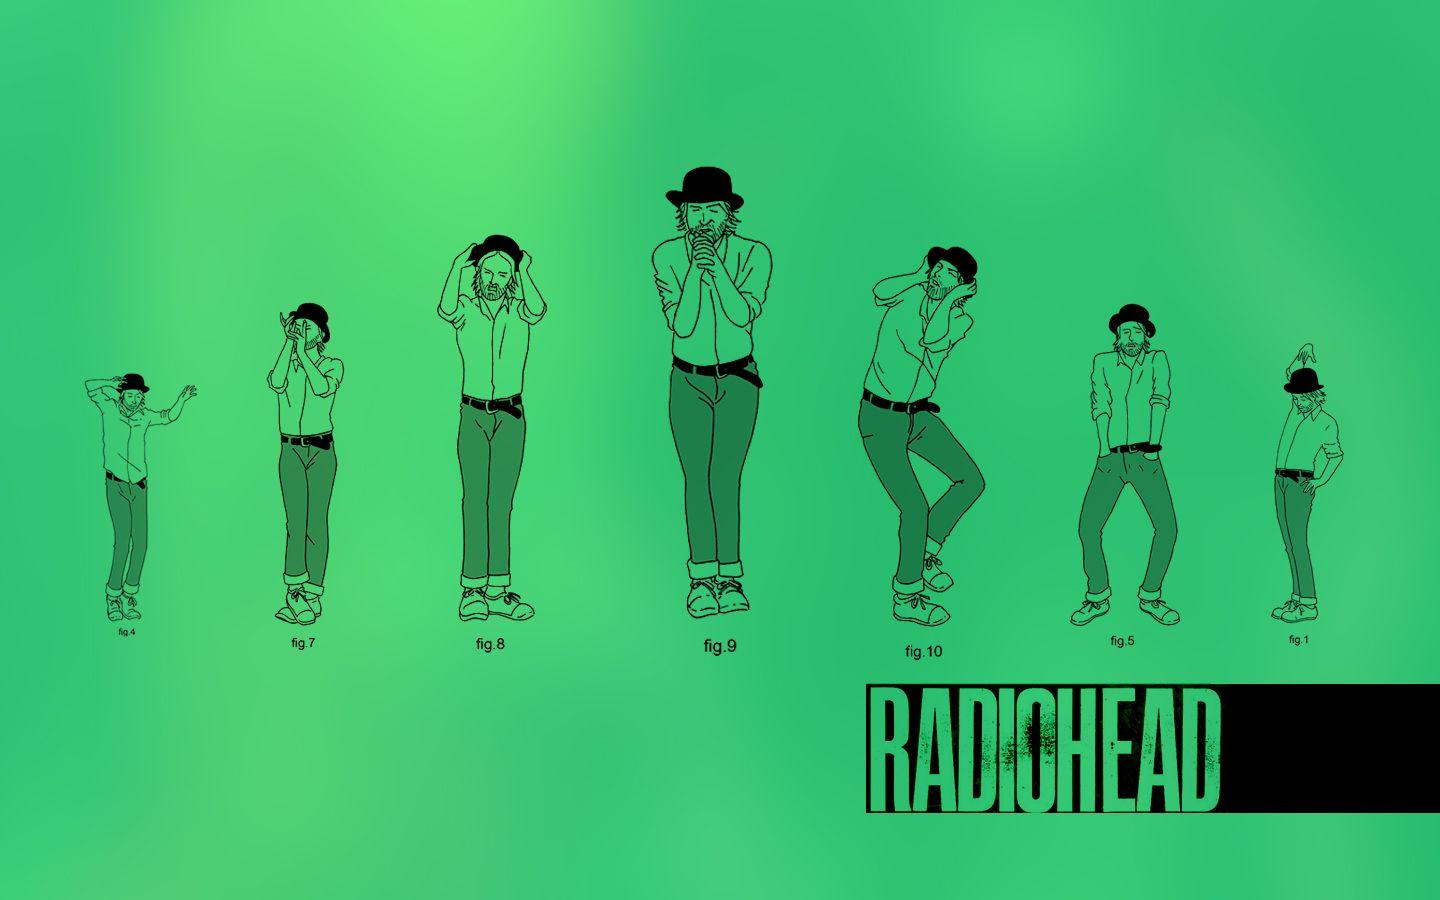 Radiohead Wallpaper, Radiohead HQ Definition Wallpaper, Free